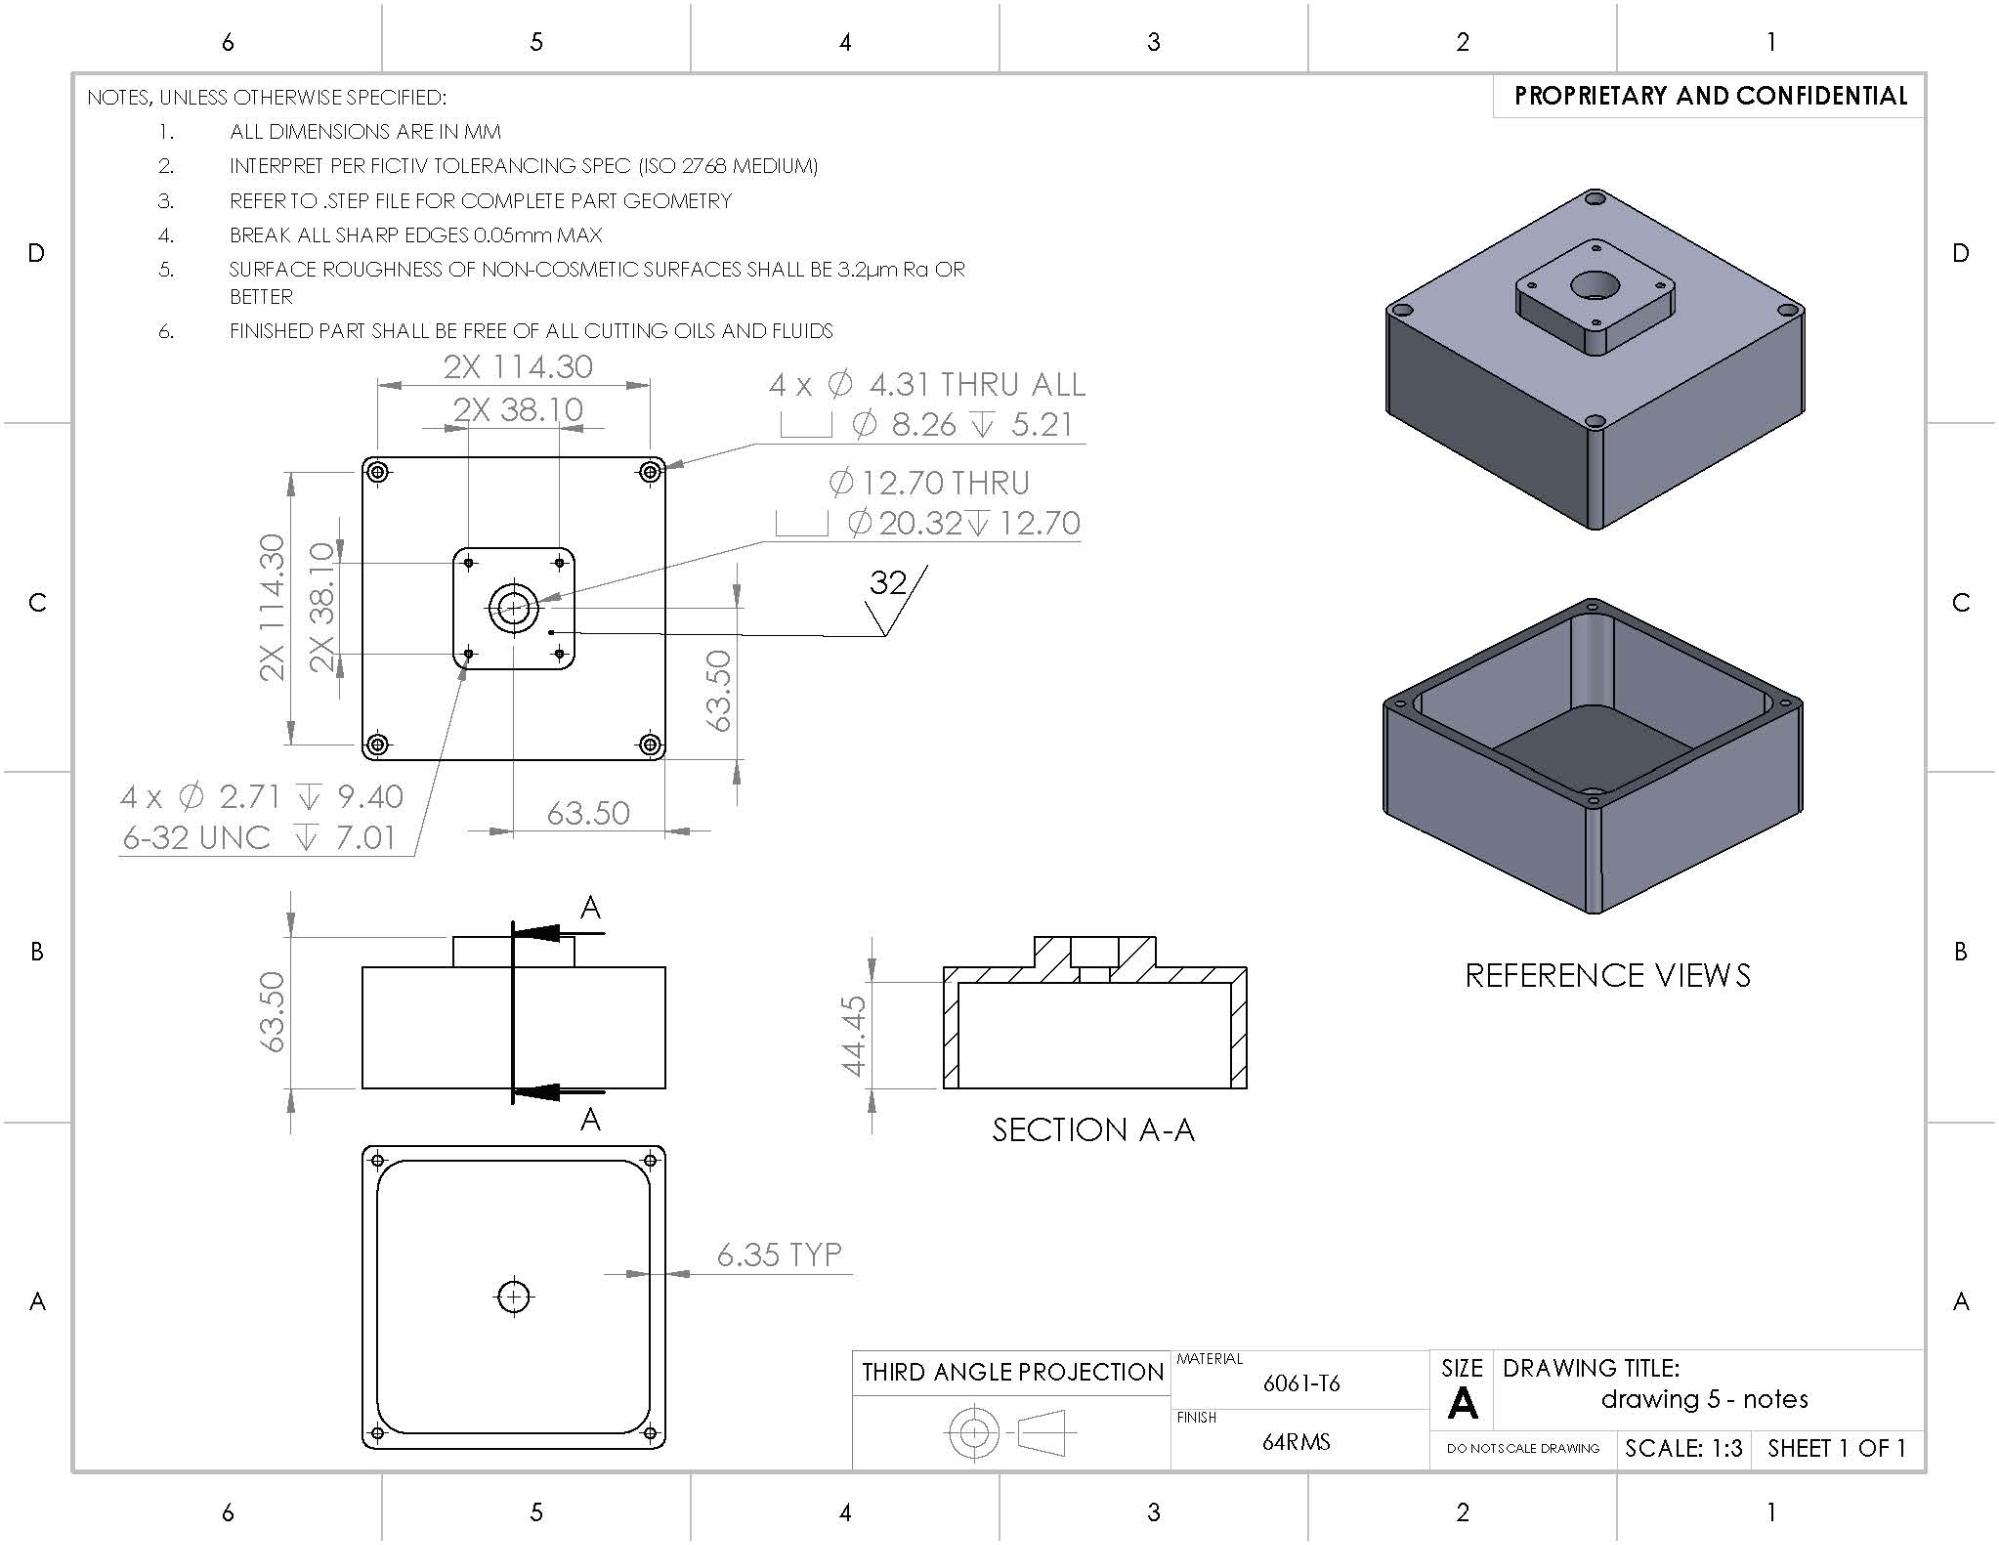 2D Technical Drawings  CNC Machining Service